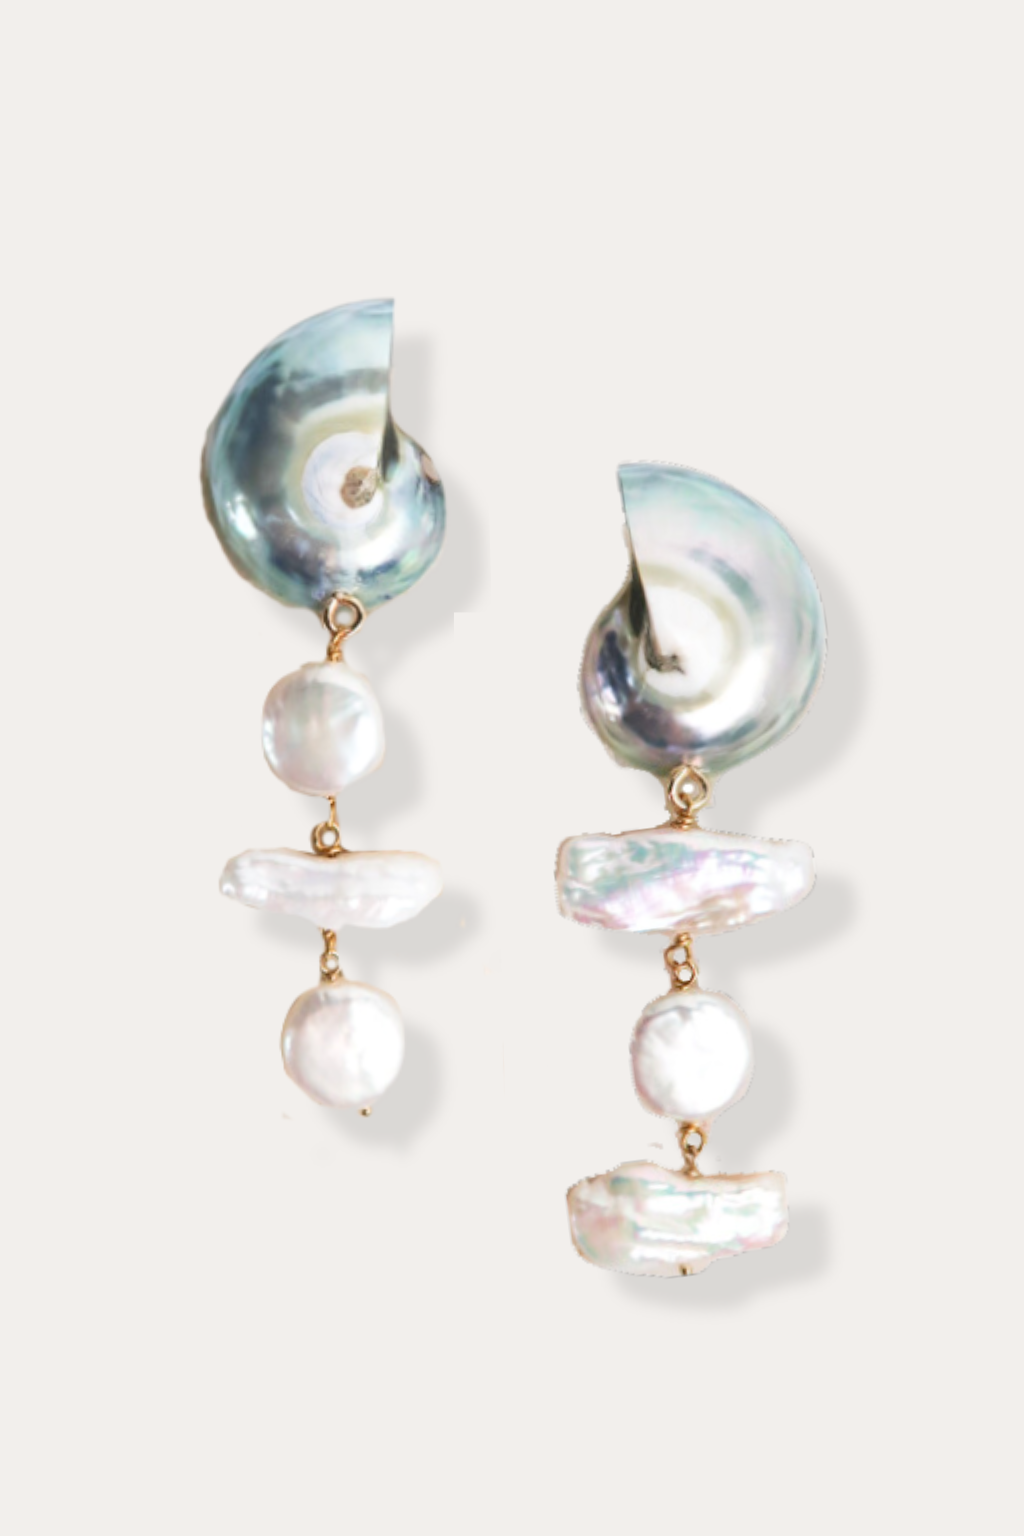 Nautilus Shell + Freshwater Pearl Earrings